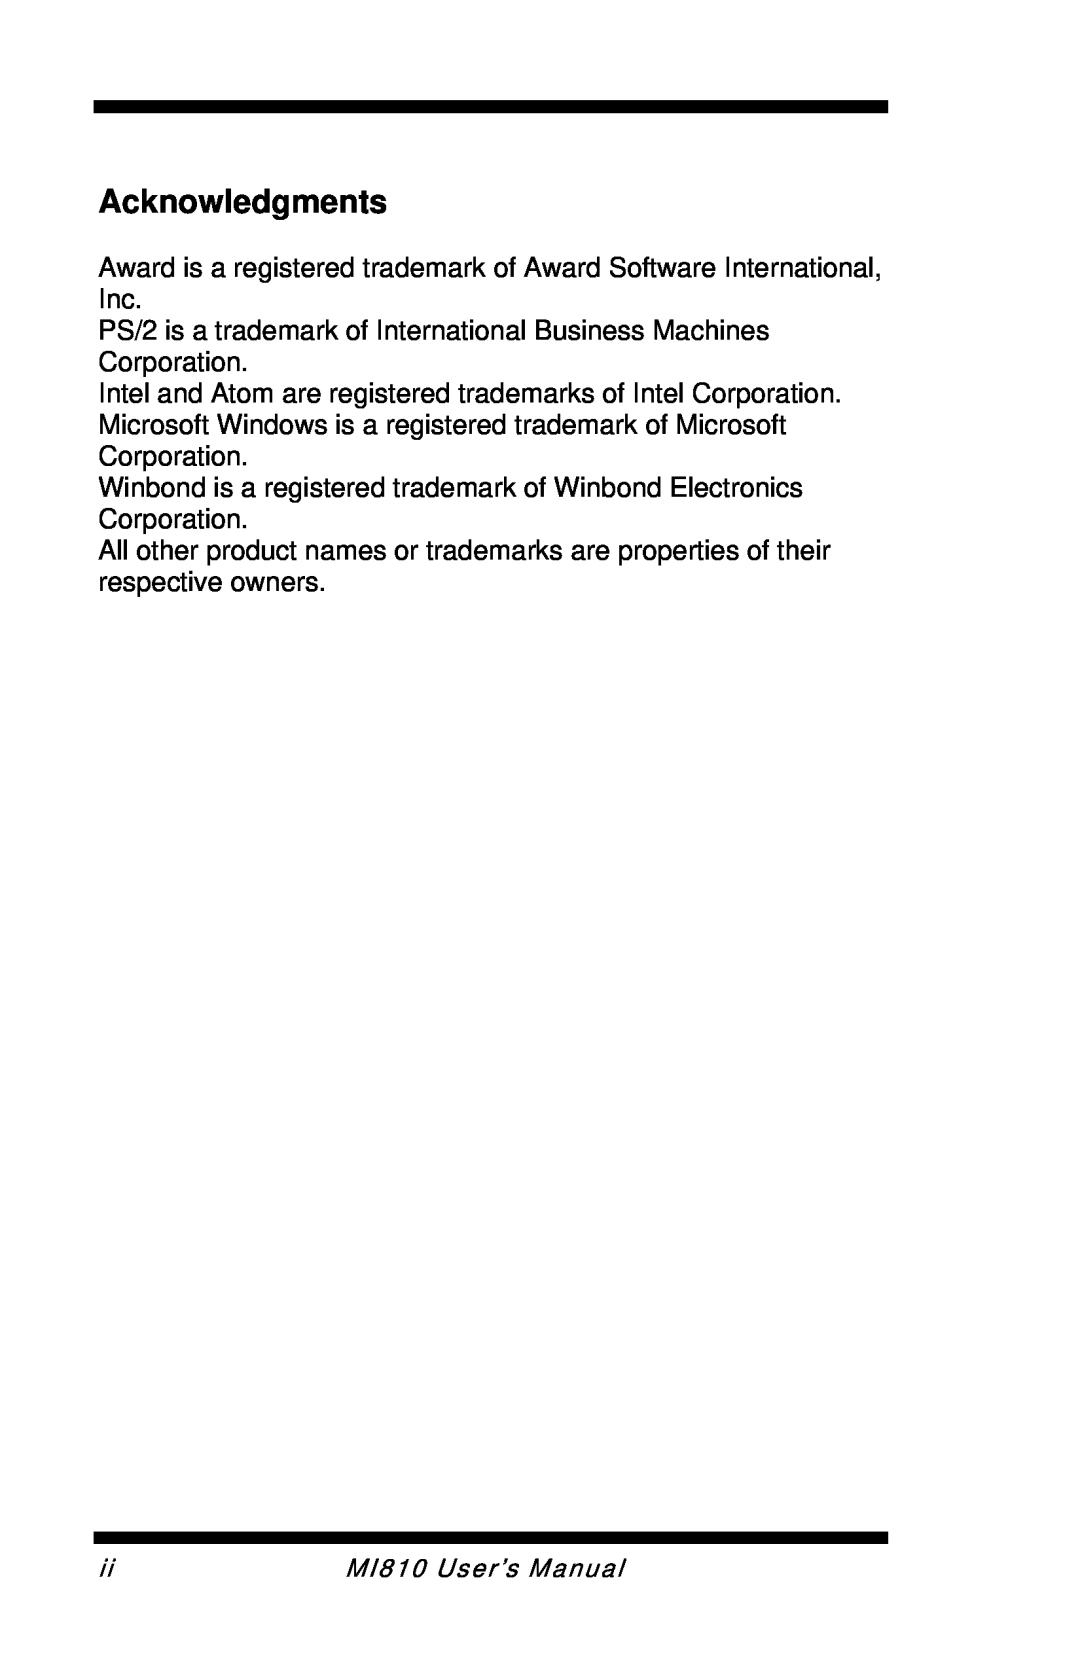 Intel MI810 user manual Acknowledgments 